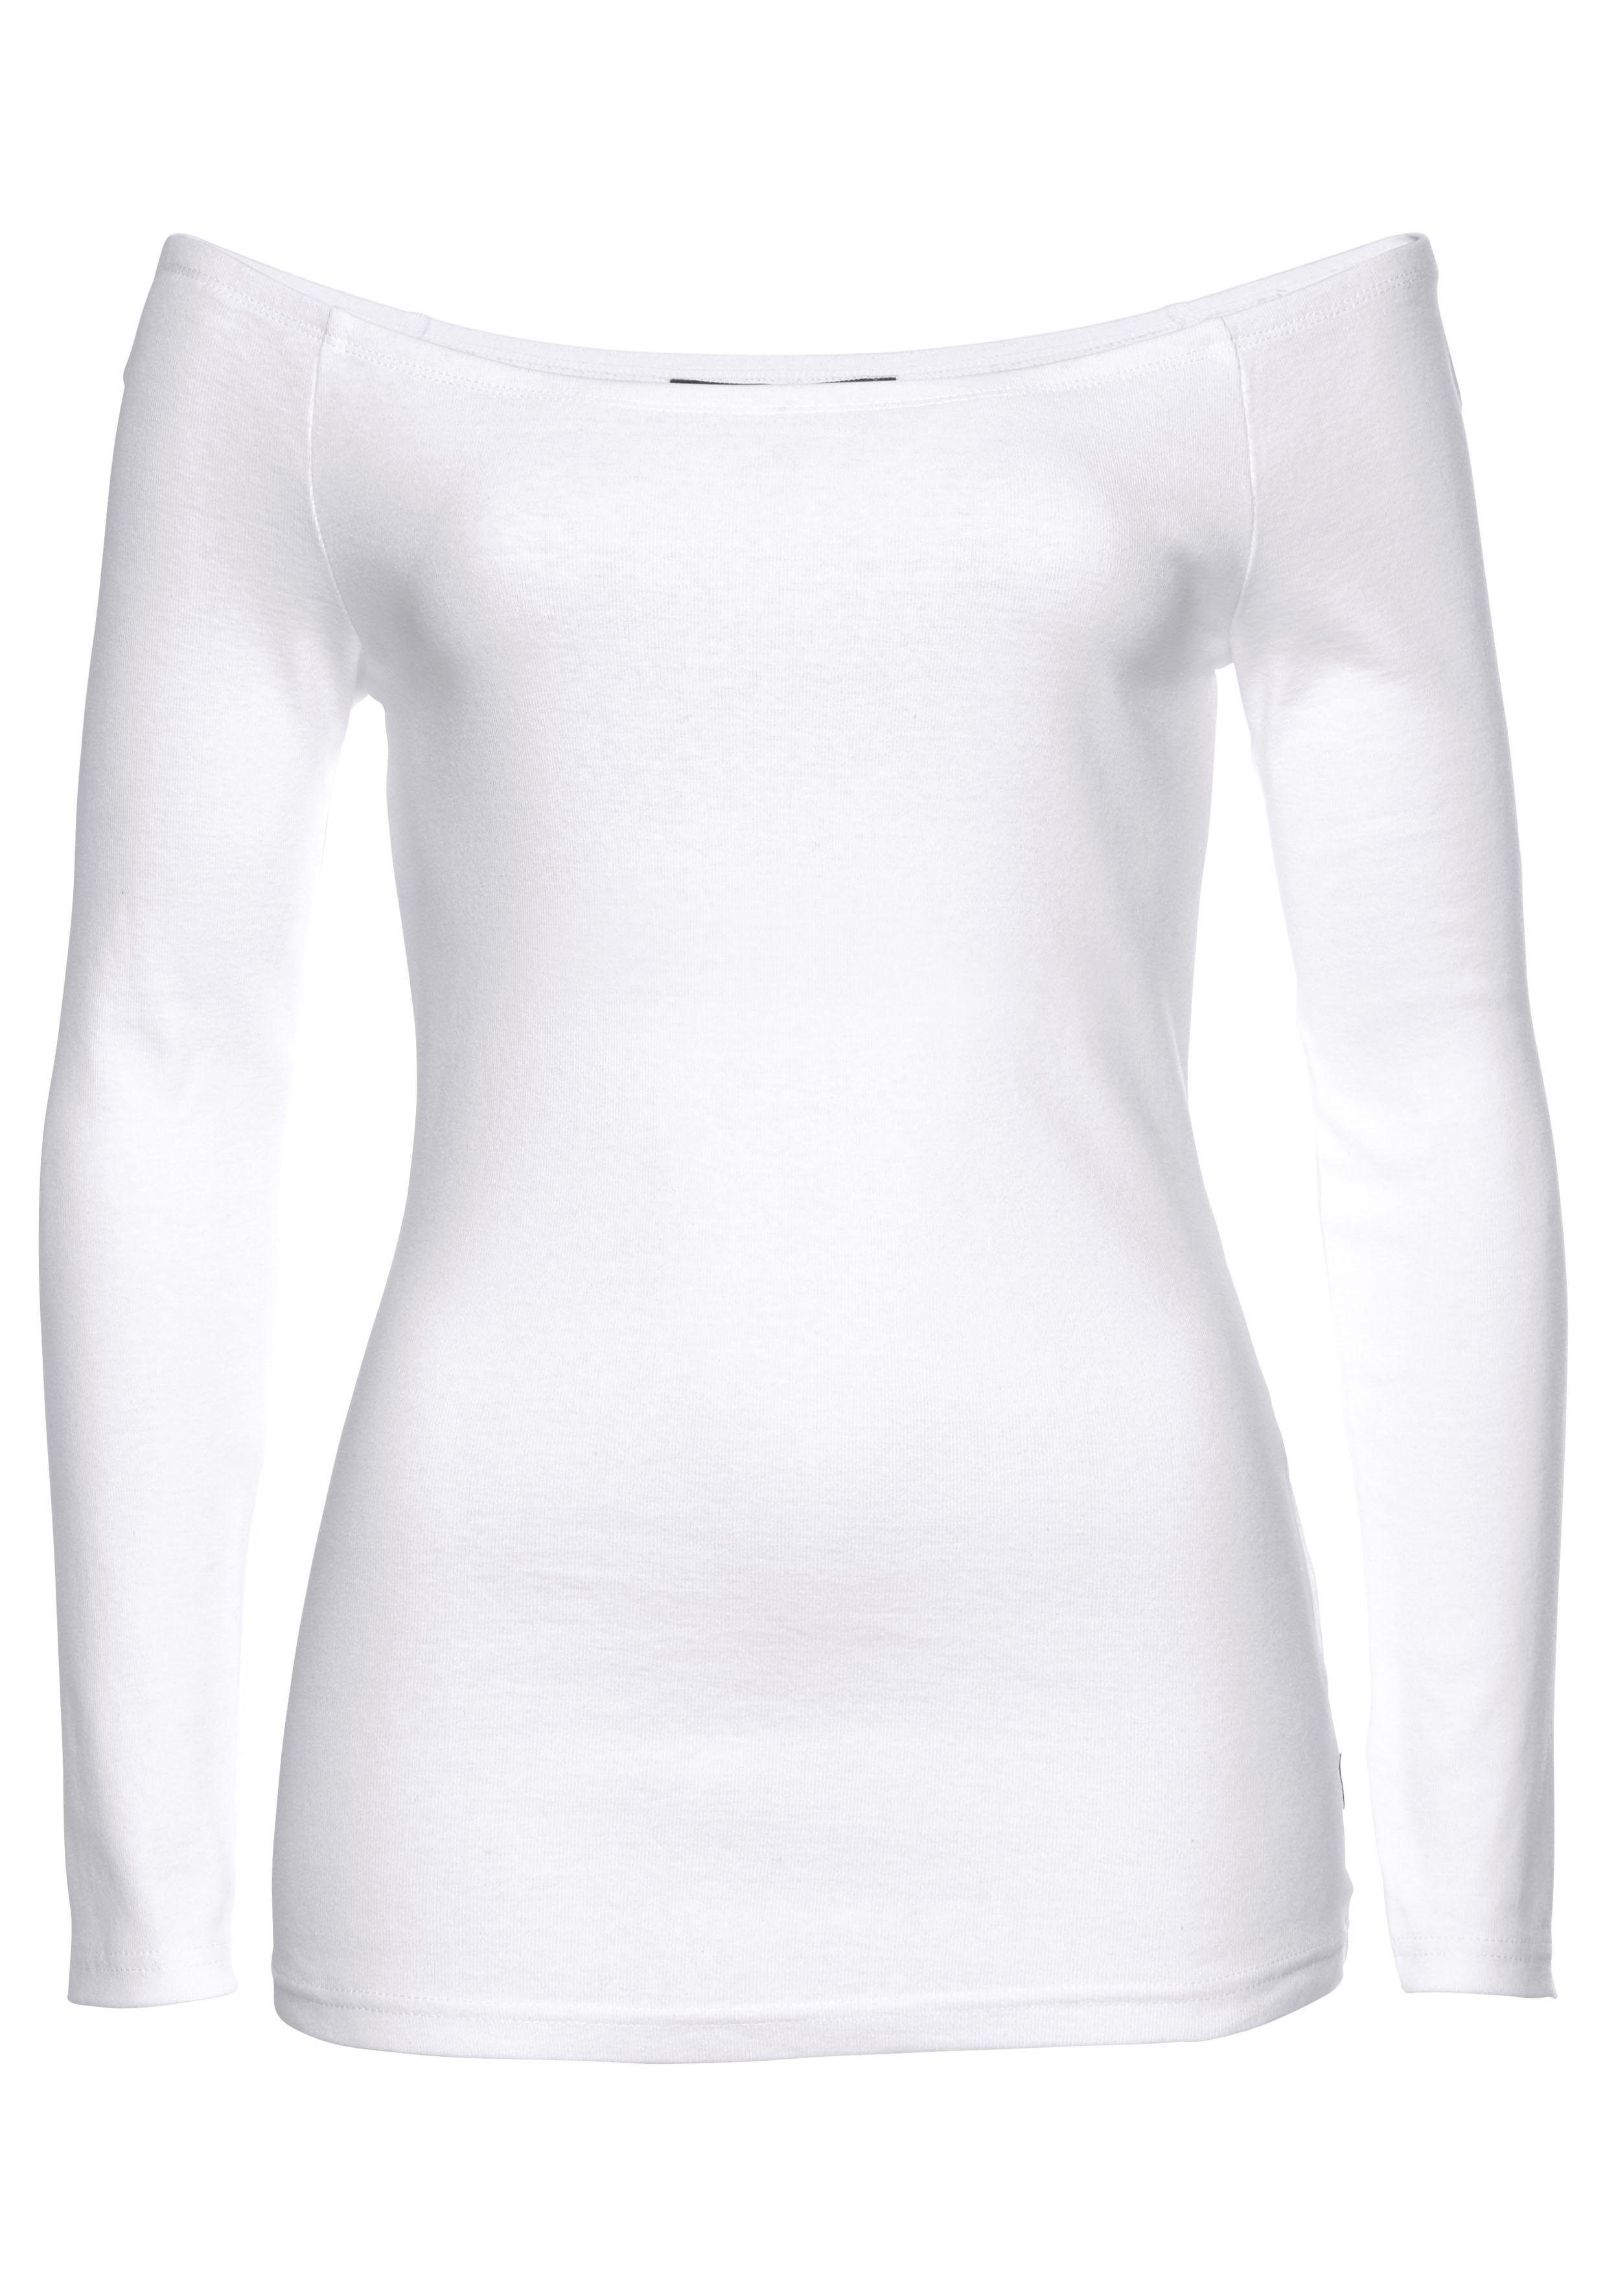 Arizona Carmenshirt variabel tragbar weiß Off-Shoulder